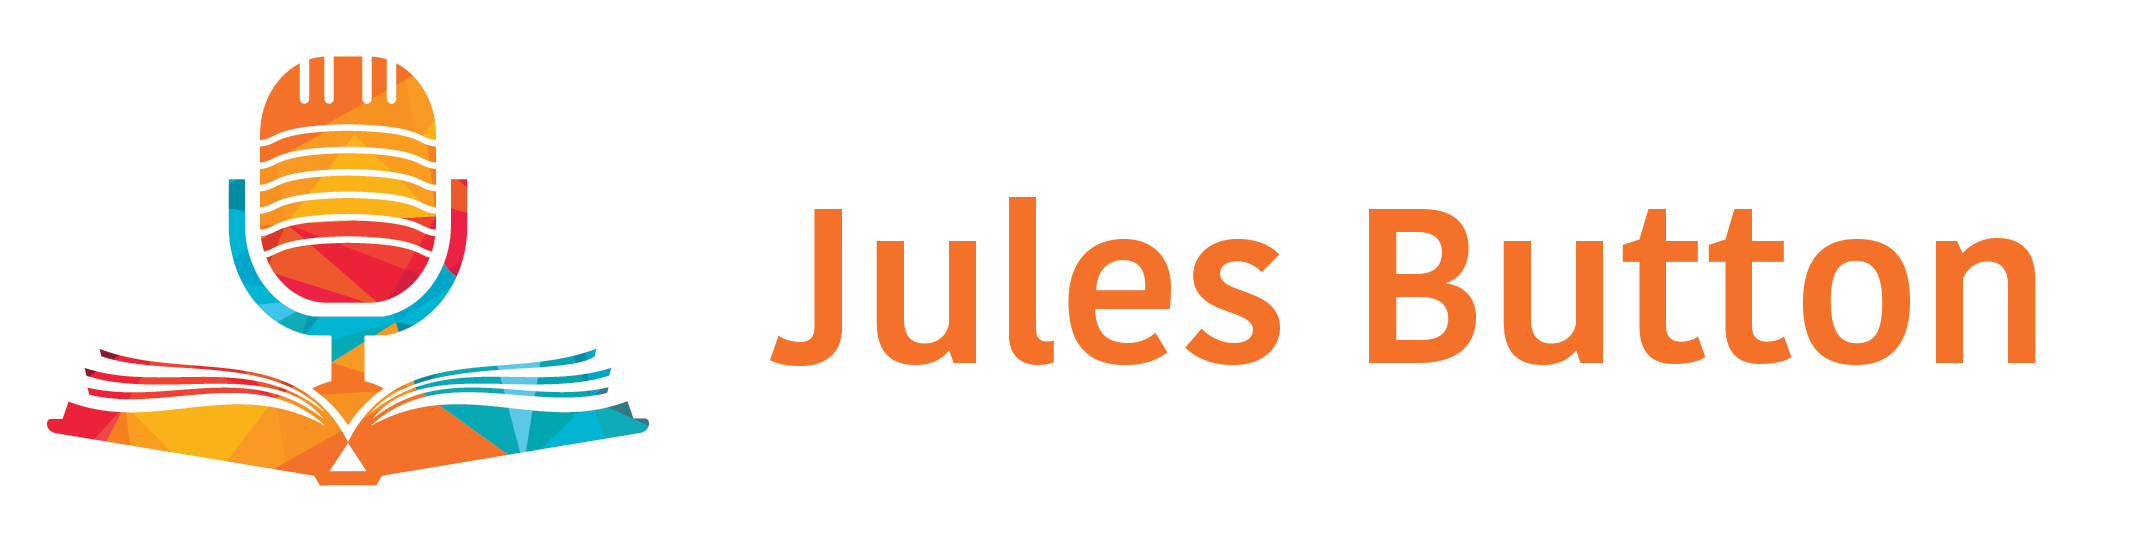 Jules Button